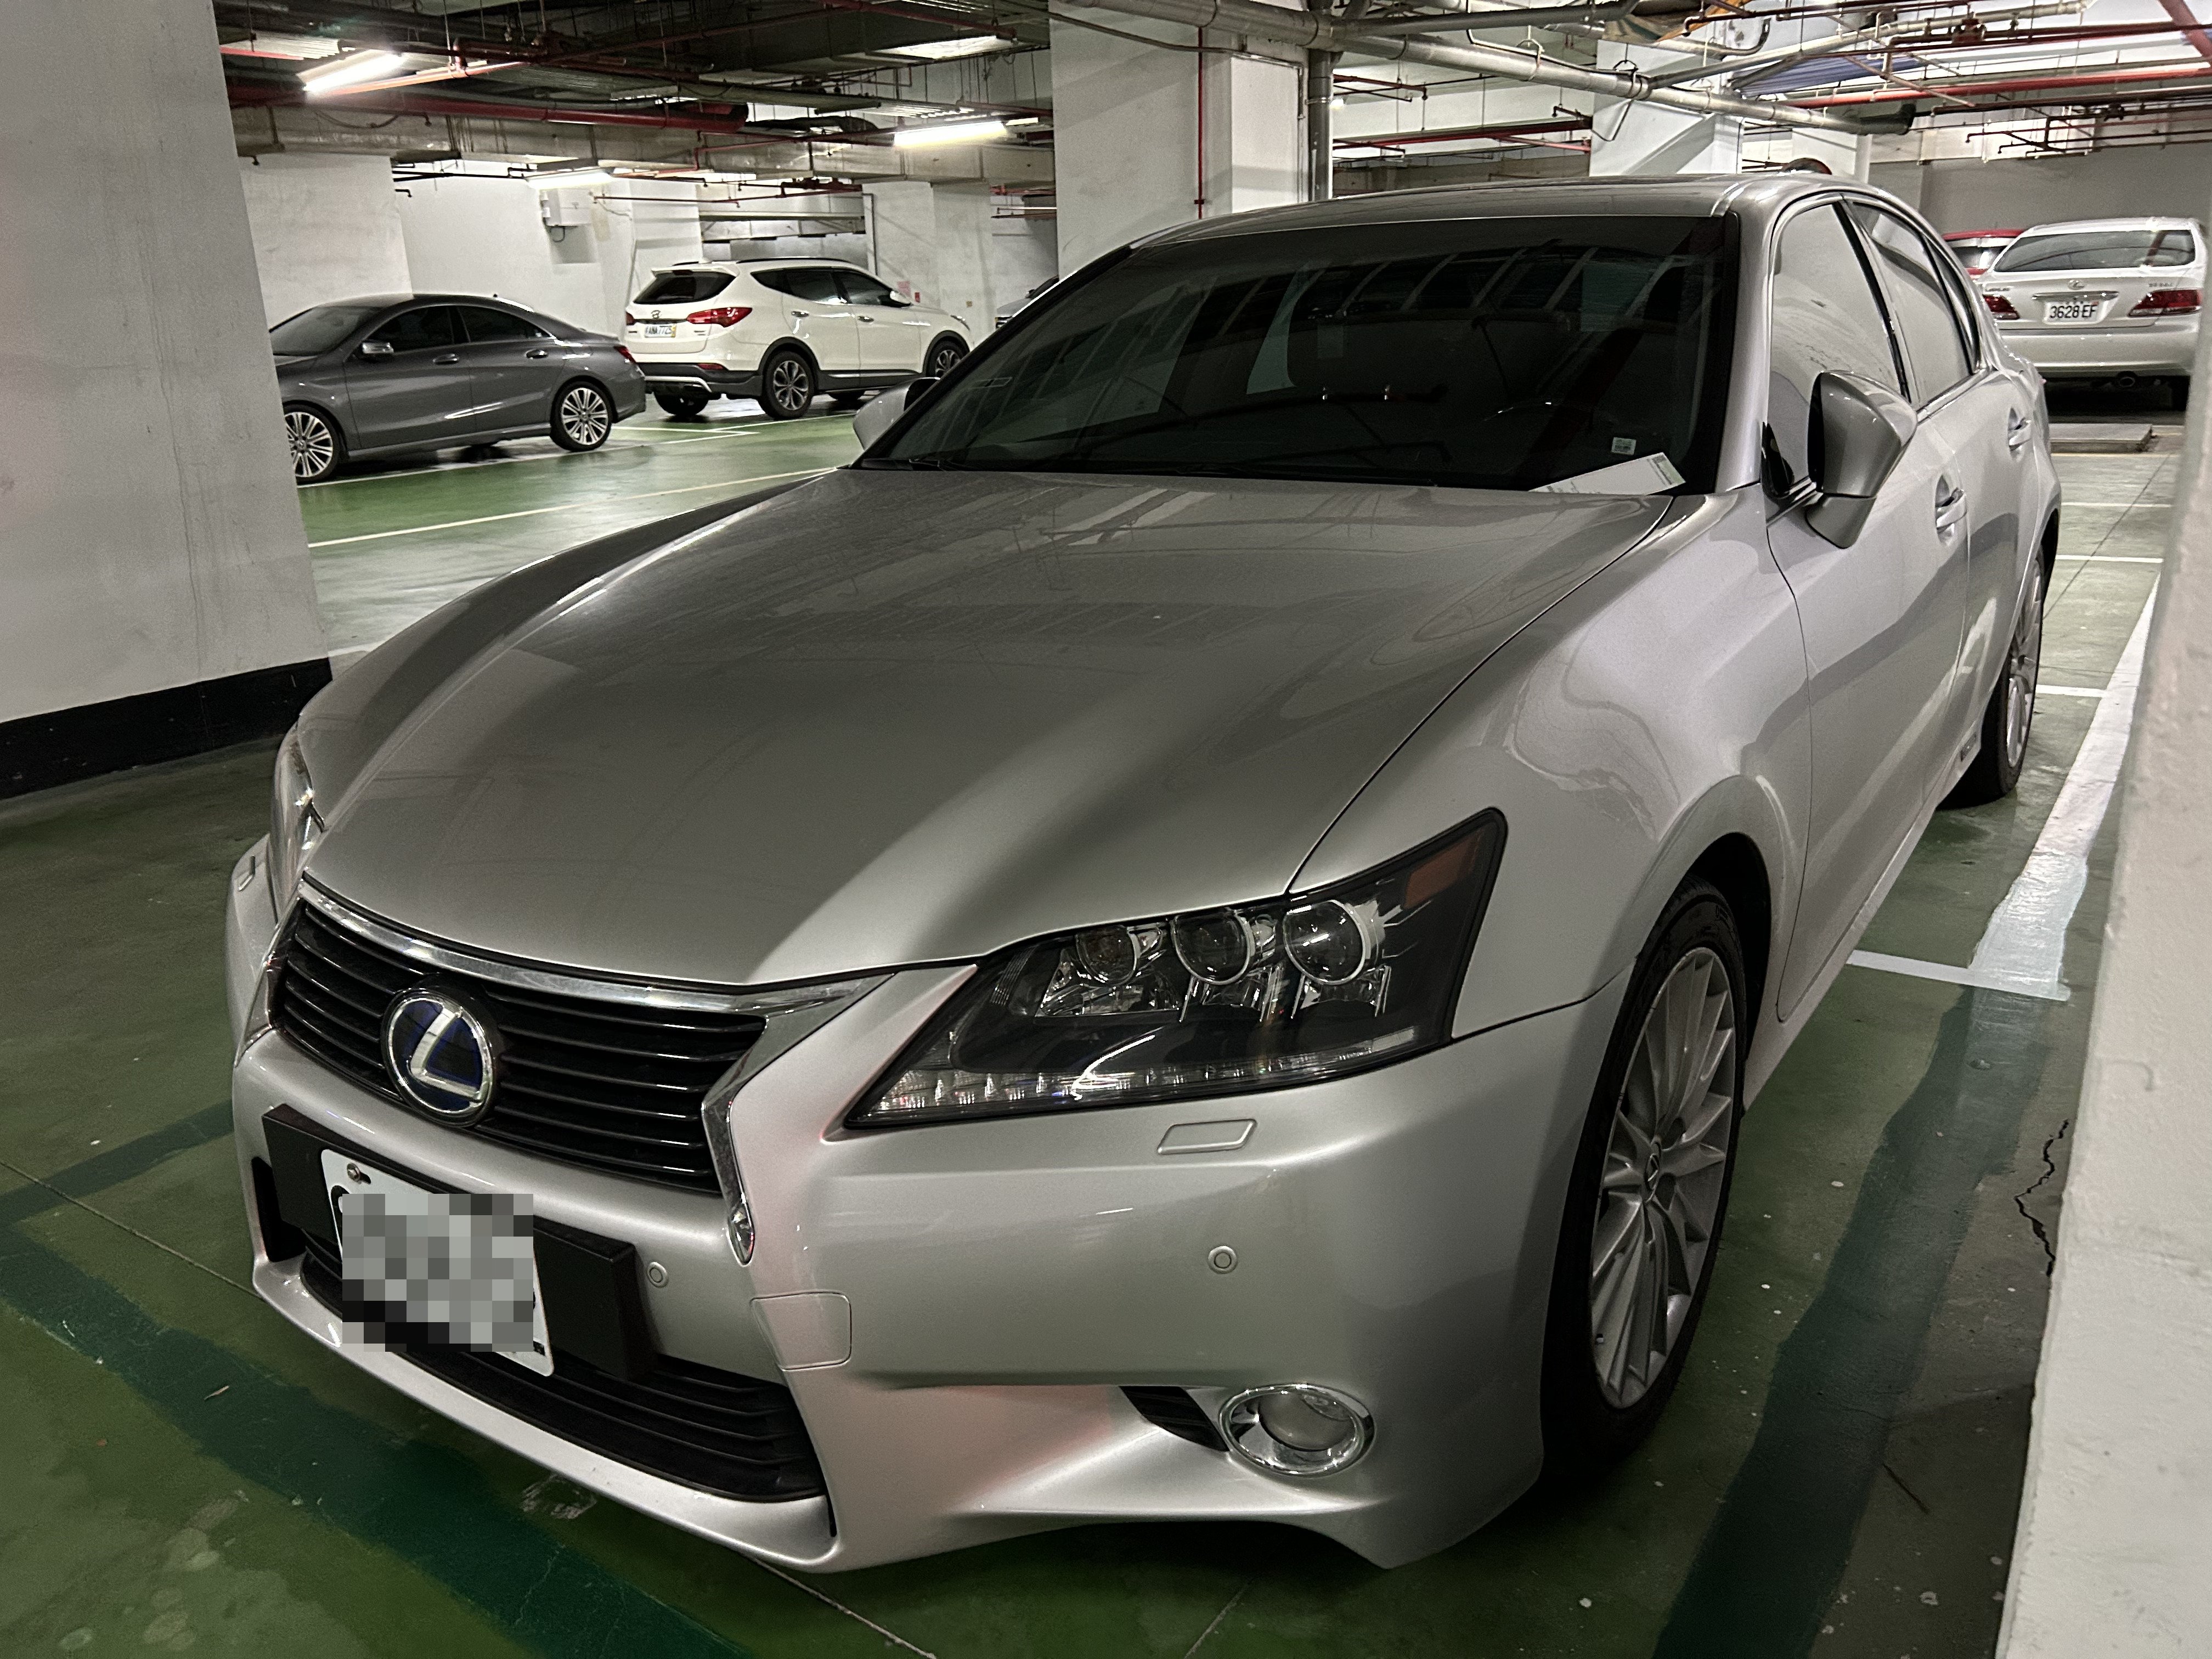 2014 Lexus 凌志 Gs